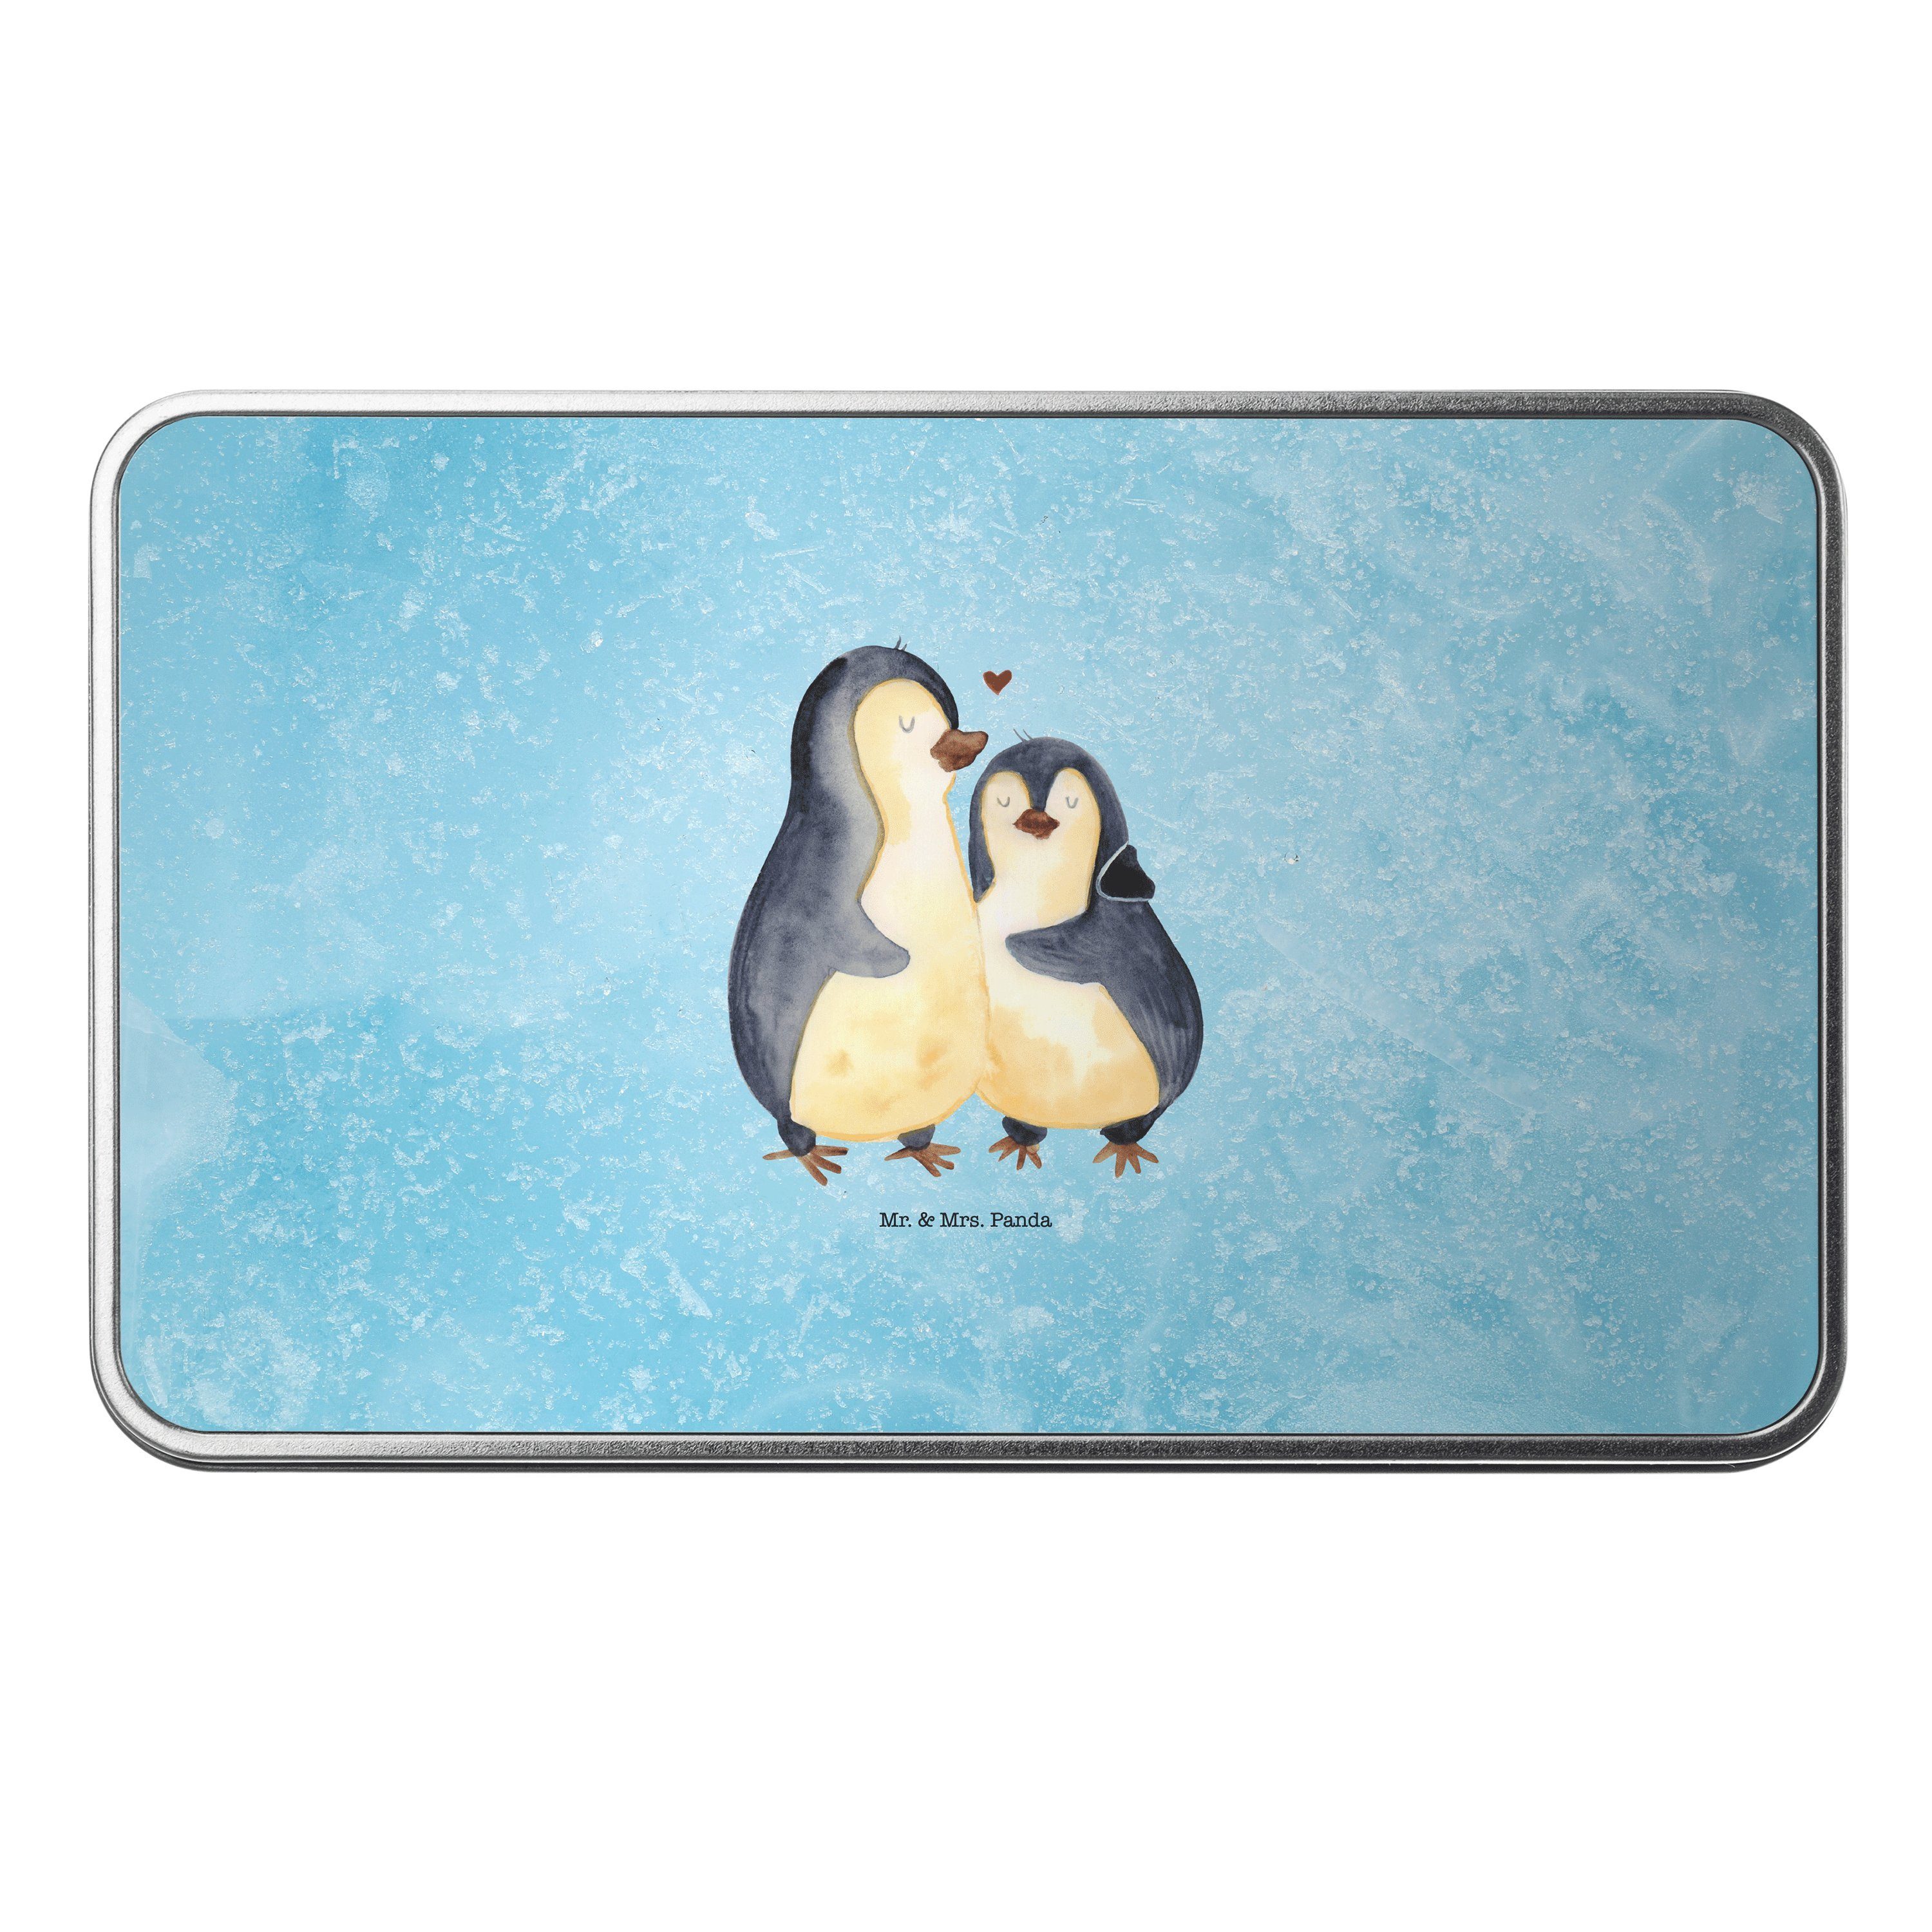 Mr. & Mrs. Panda Dose Pinguin umarmend - Eisblau - Geschenk, Hochzeitsgeschenk, verknallt, (1 St)